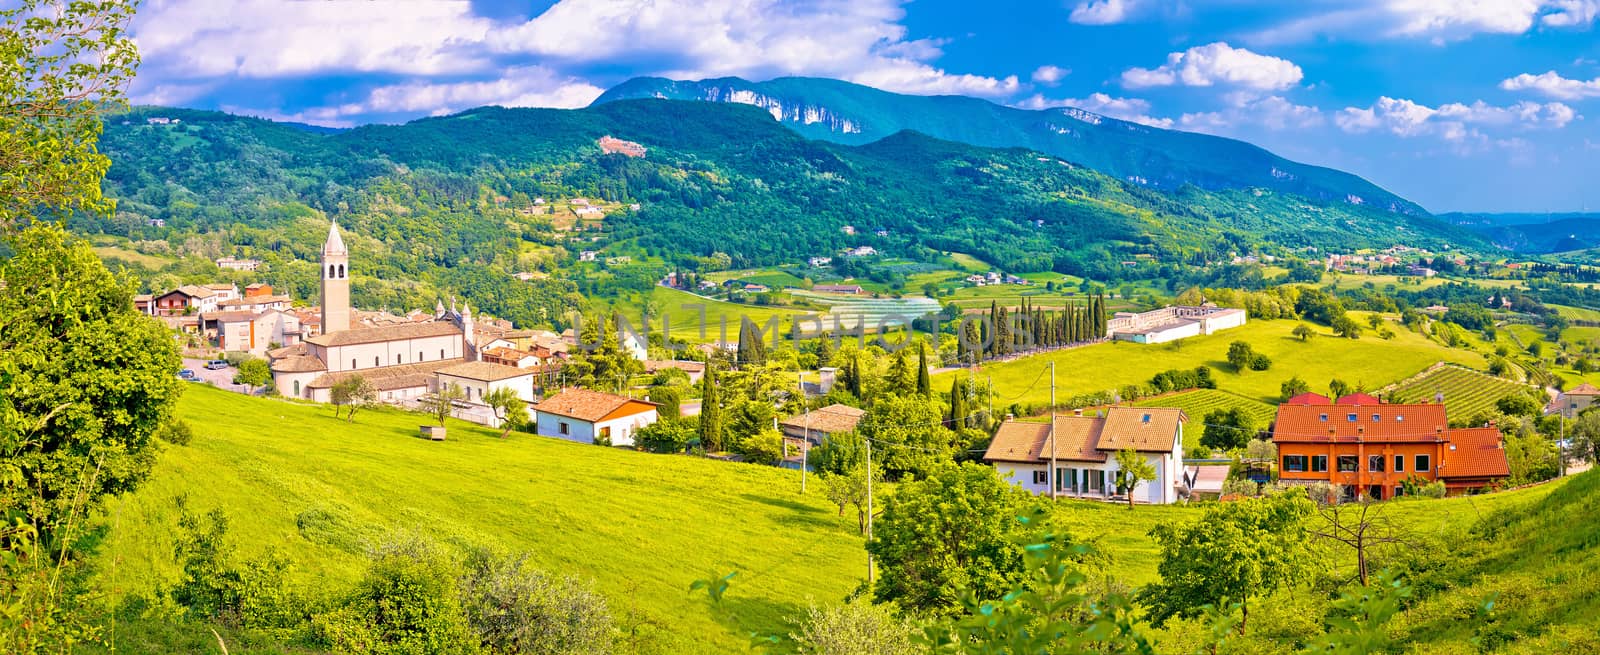 Picturesque village of Pazzon panoramic view, Veneto region of Italy